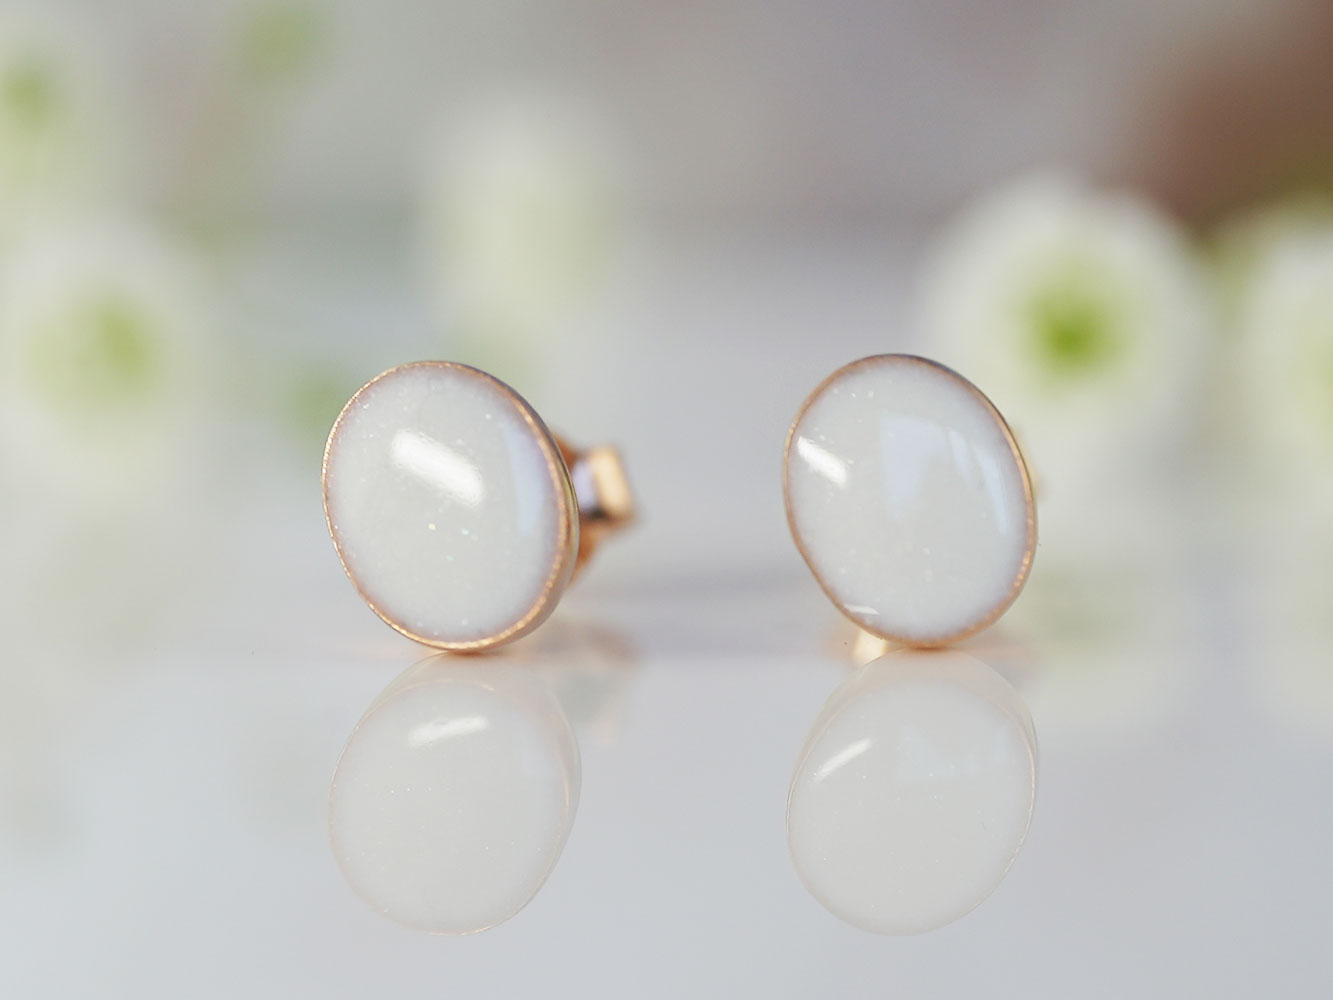 Breastmilk Jewelry Earrings Pair Oval Studs Rose Gold Keepsakemom